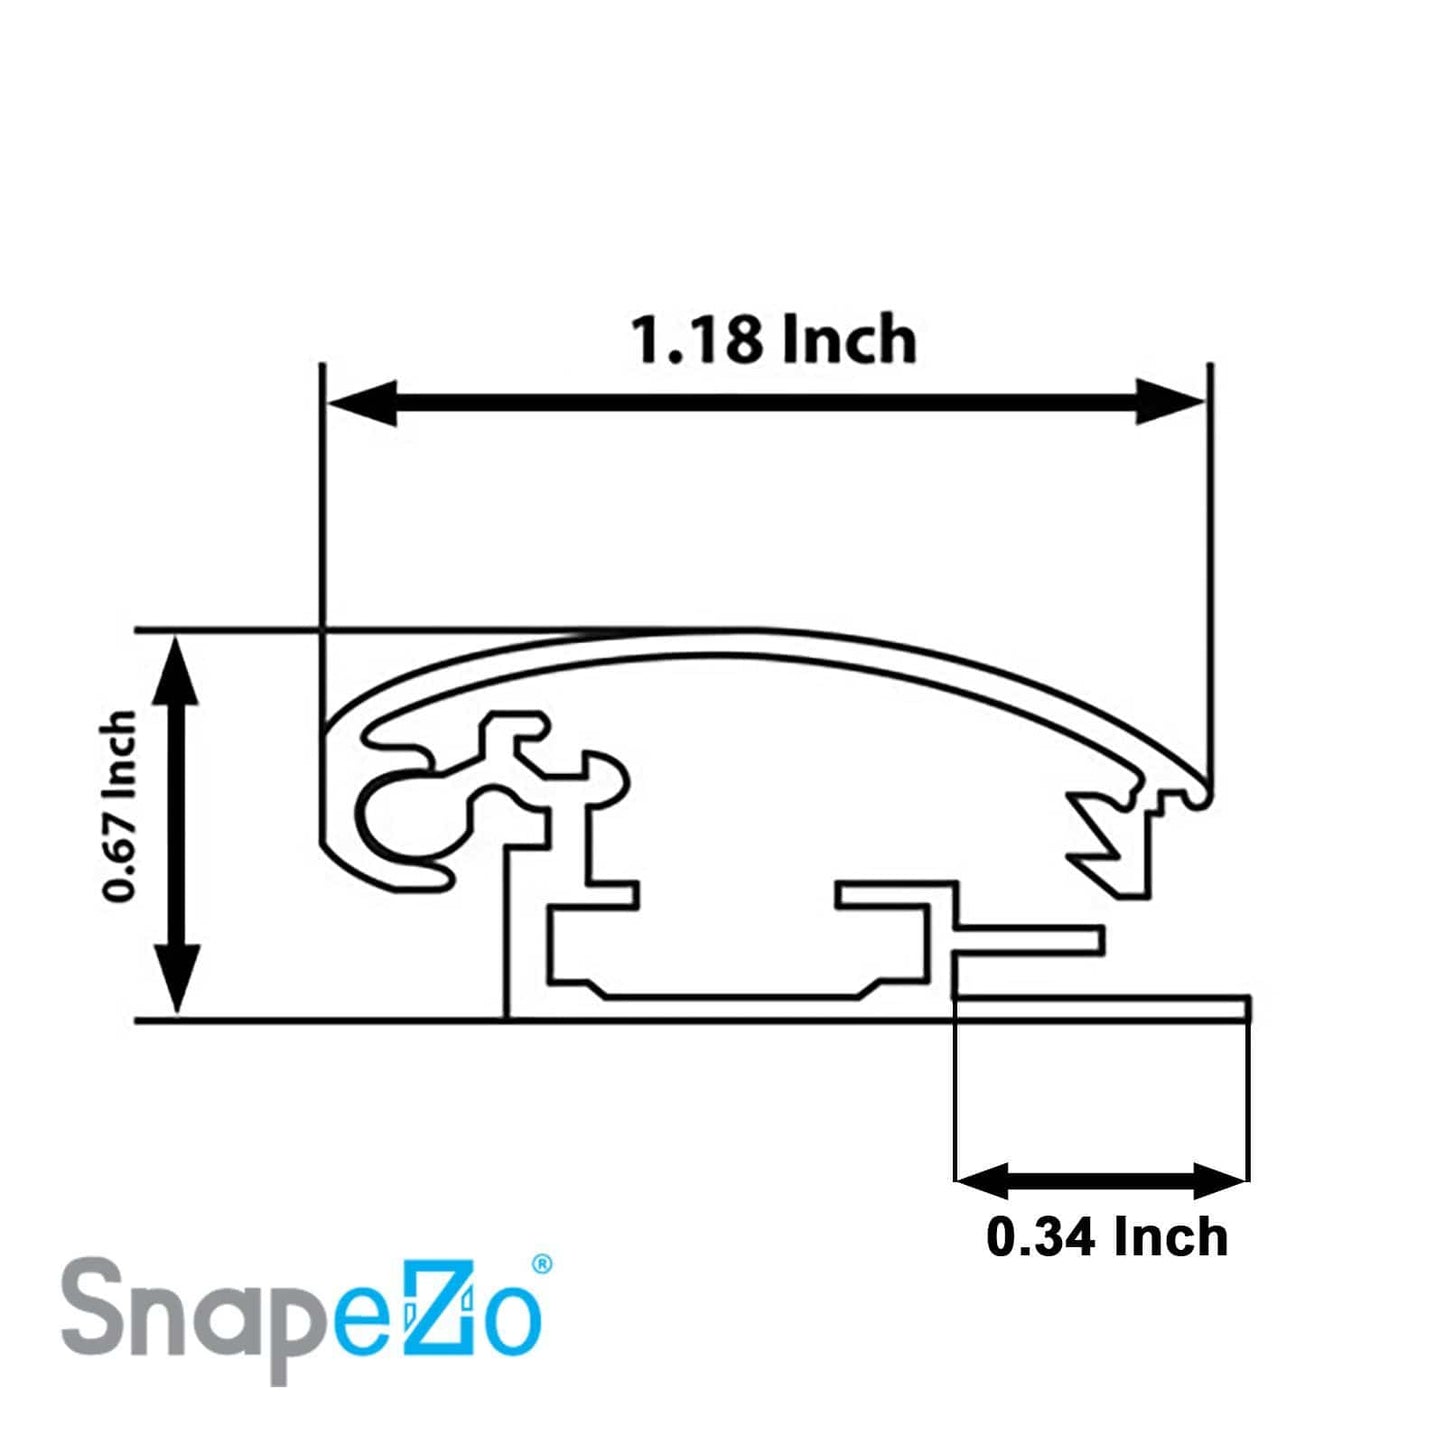 17x38 Black SnapeZo® Snap Frame - 1.2" Profile - Snap Frames Direct